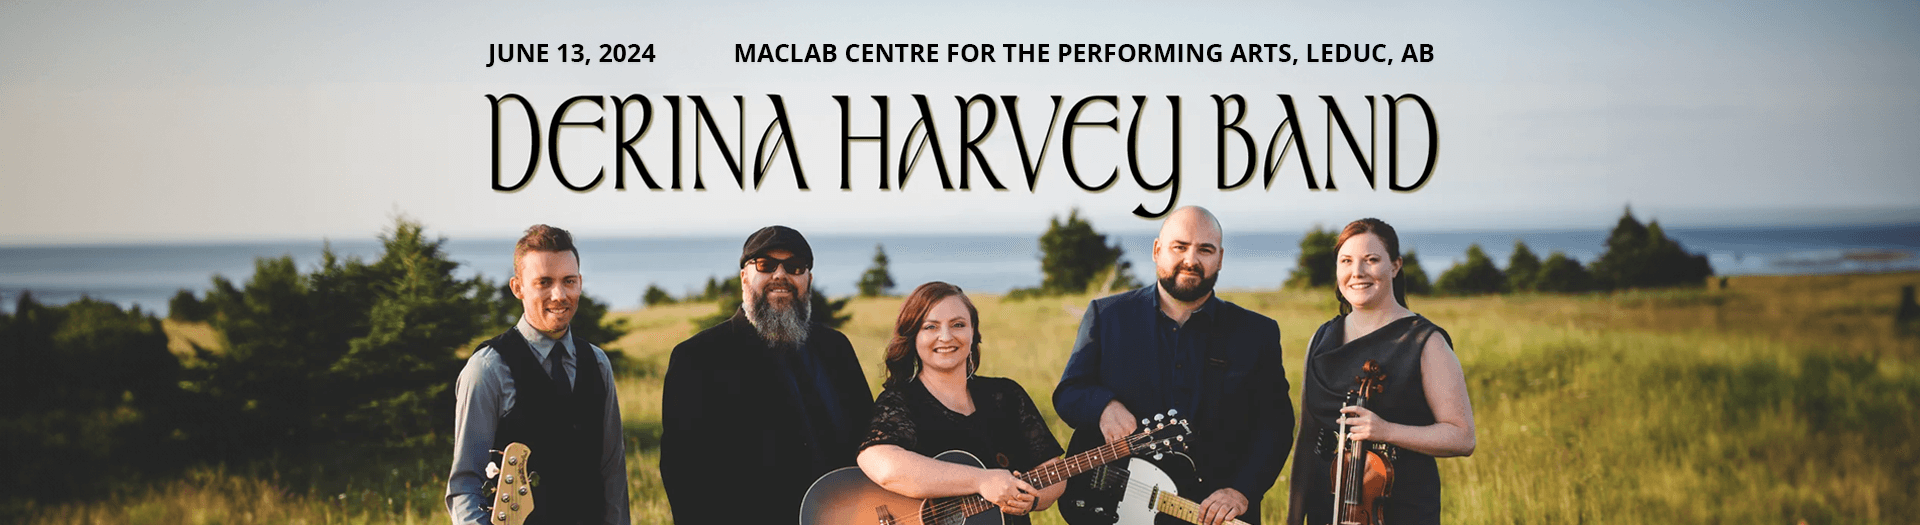 Derina Harvey Band, Maclab Centre, Leduc, AB